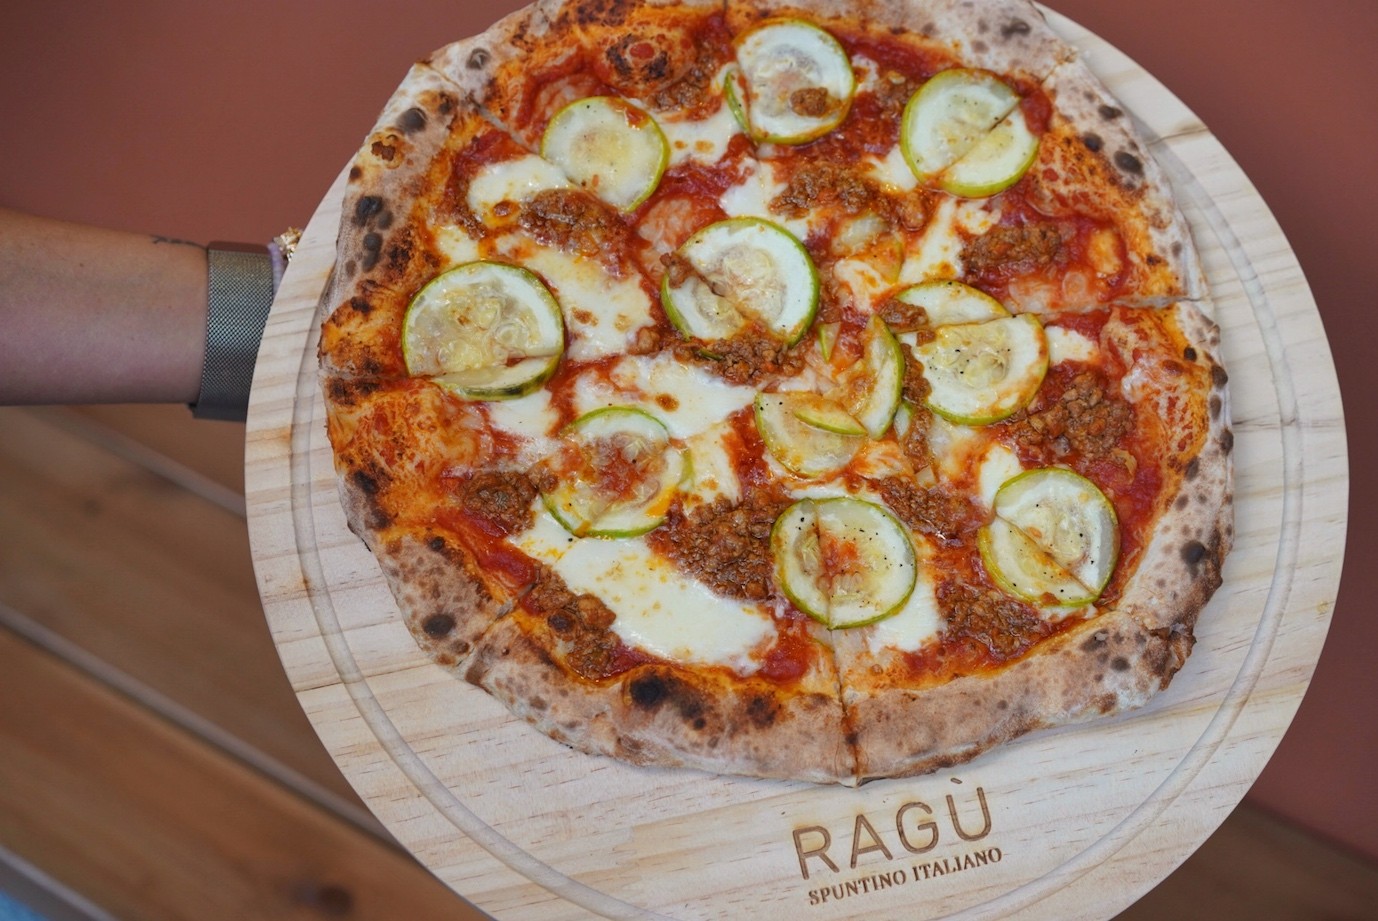 Ragù: Real Italian Flavors in Street Food Form